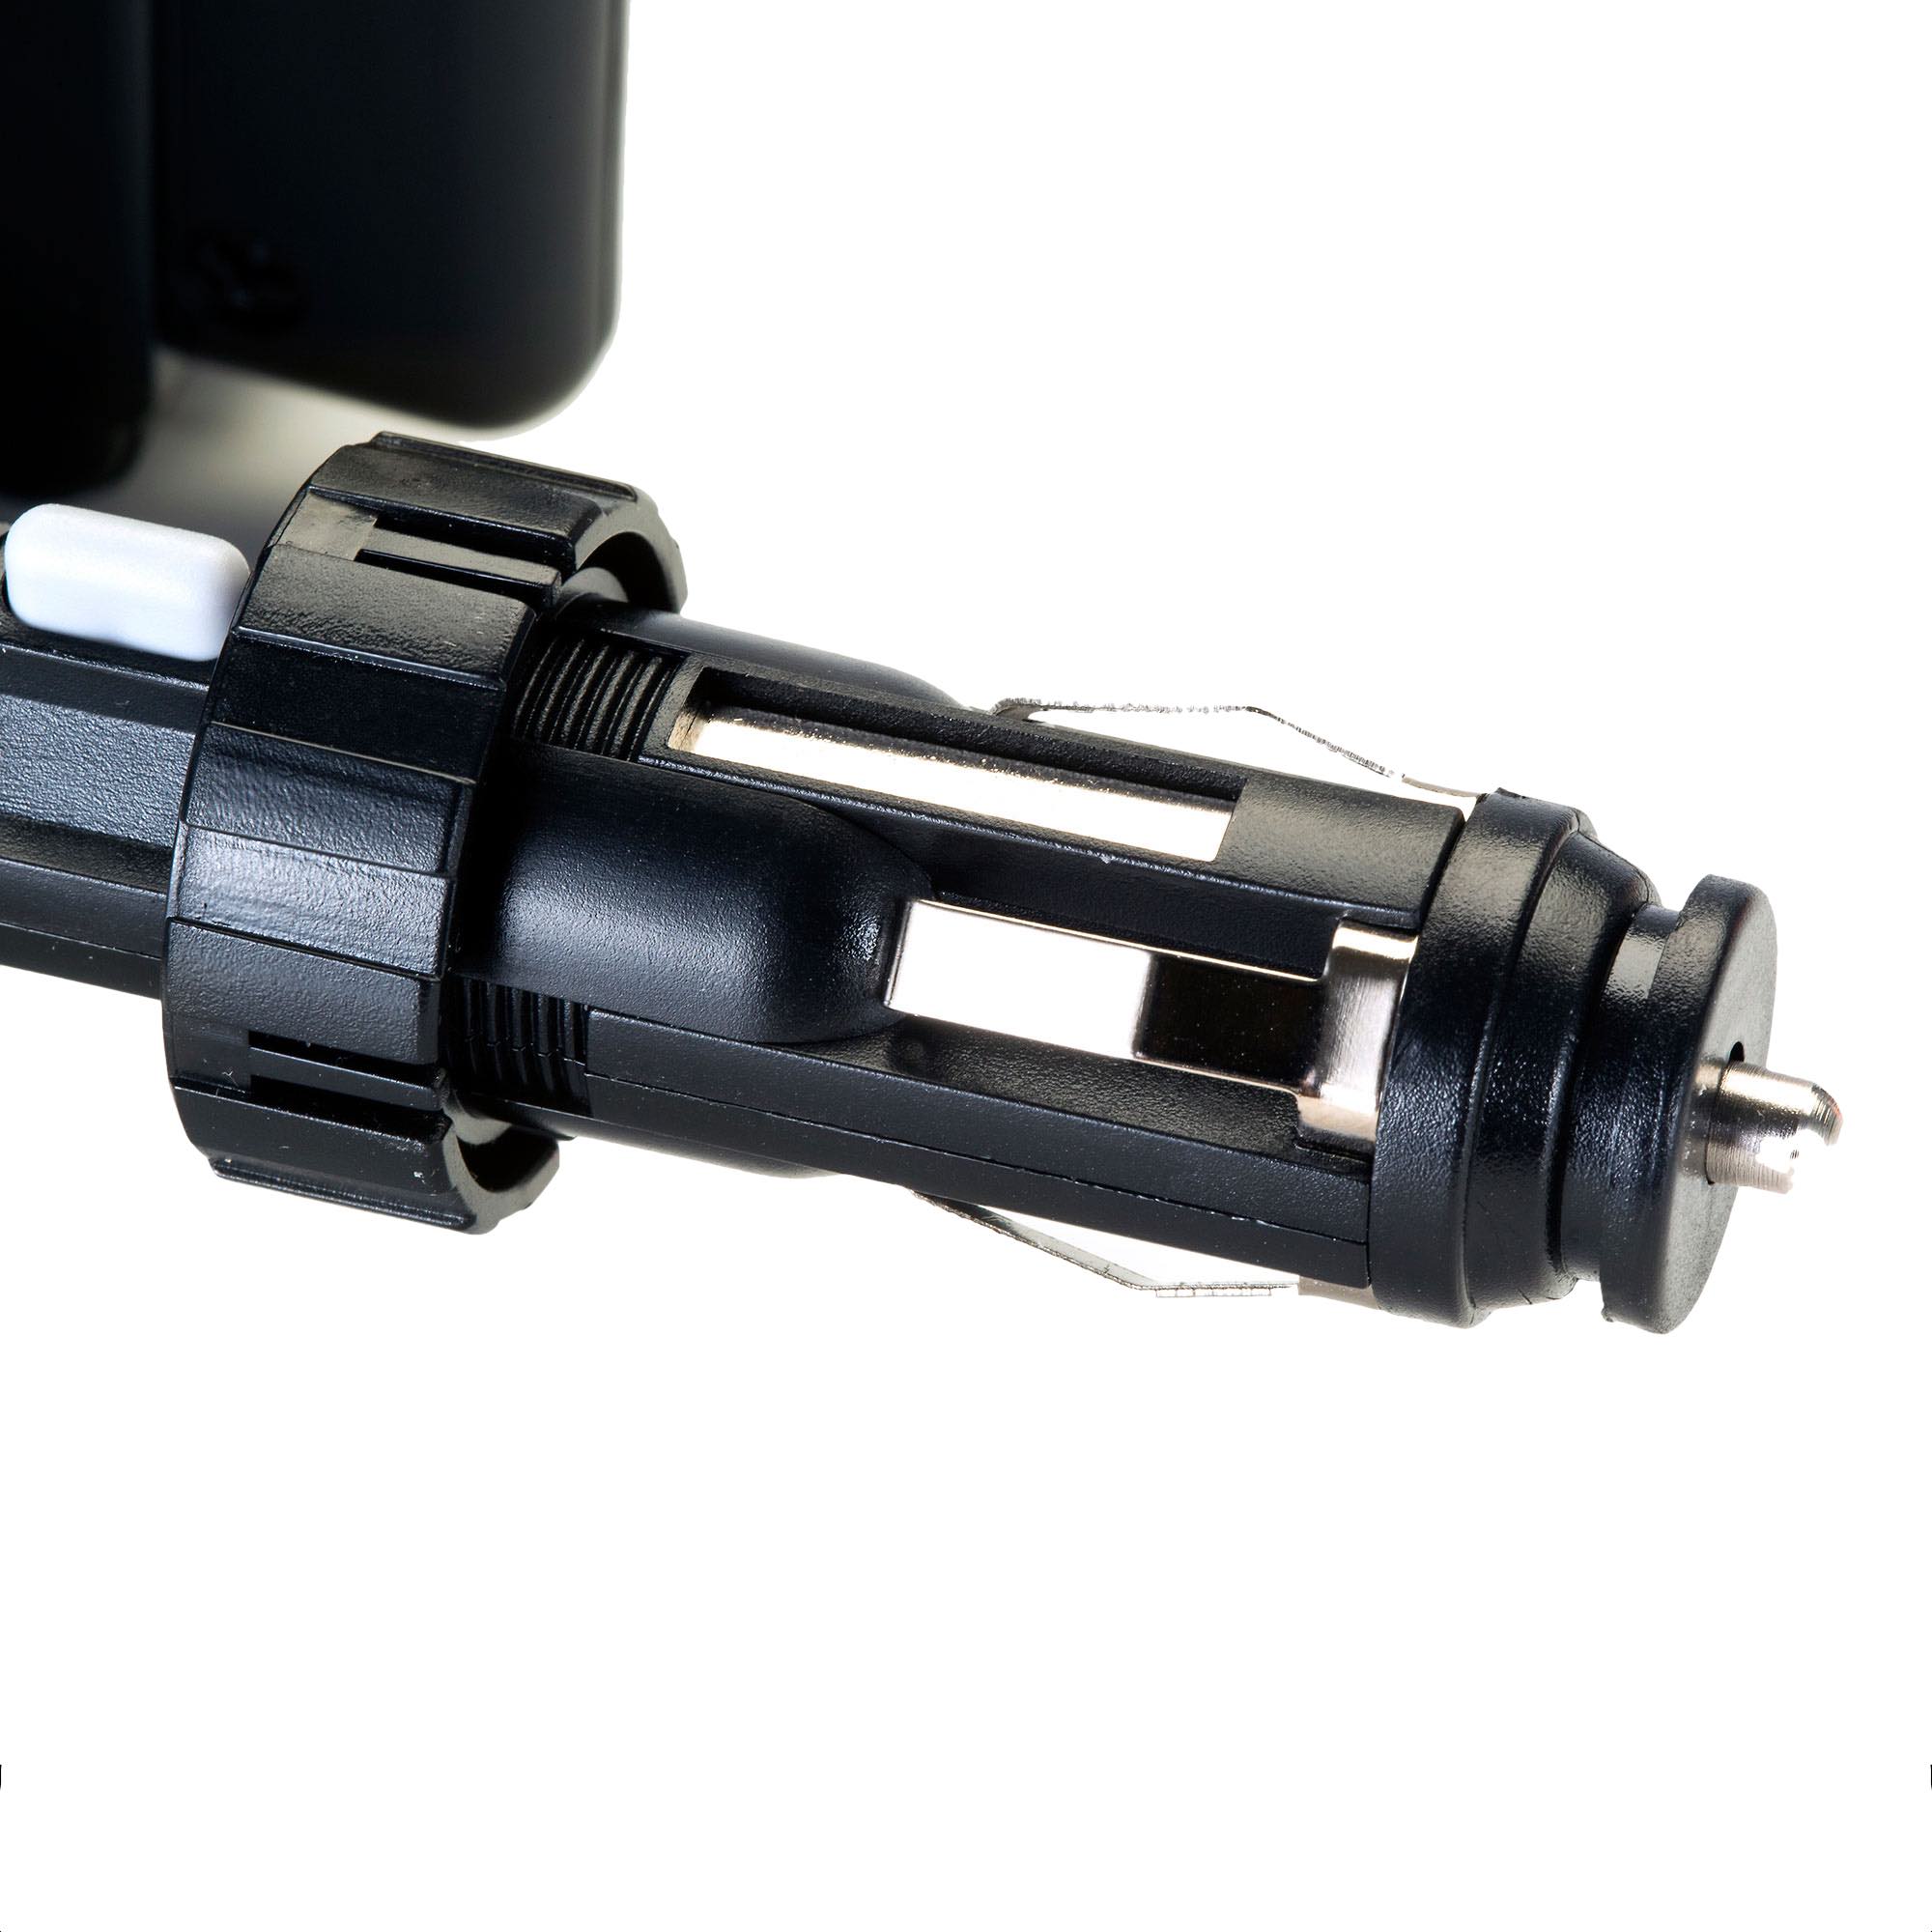 Dual USB / 12V Charger Car Cigarette Lighter Mount and Holder for the Garmin nuvi 57 / 58 LM LMT